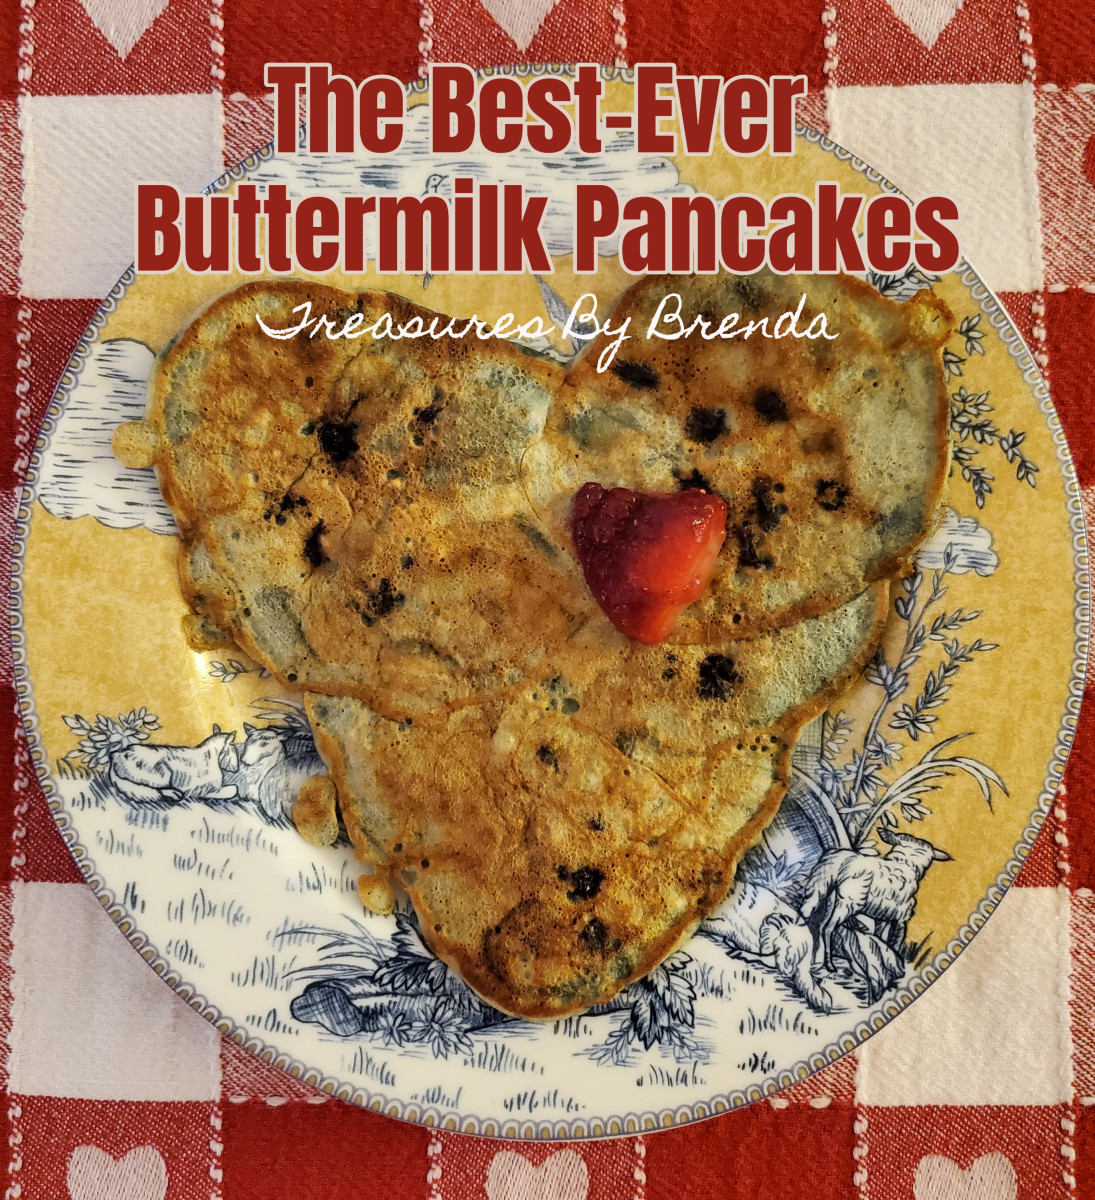 The Best-Ever Buttermilk Pancake Recipe